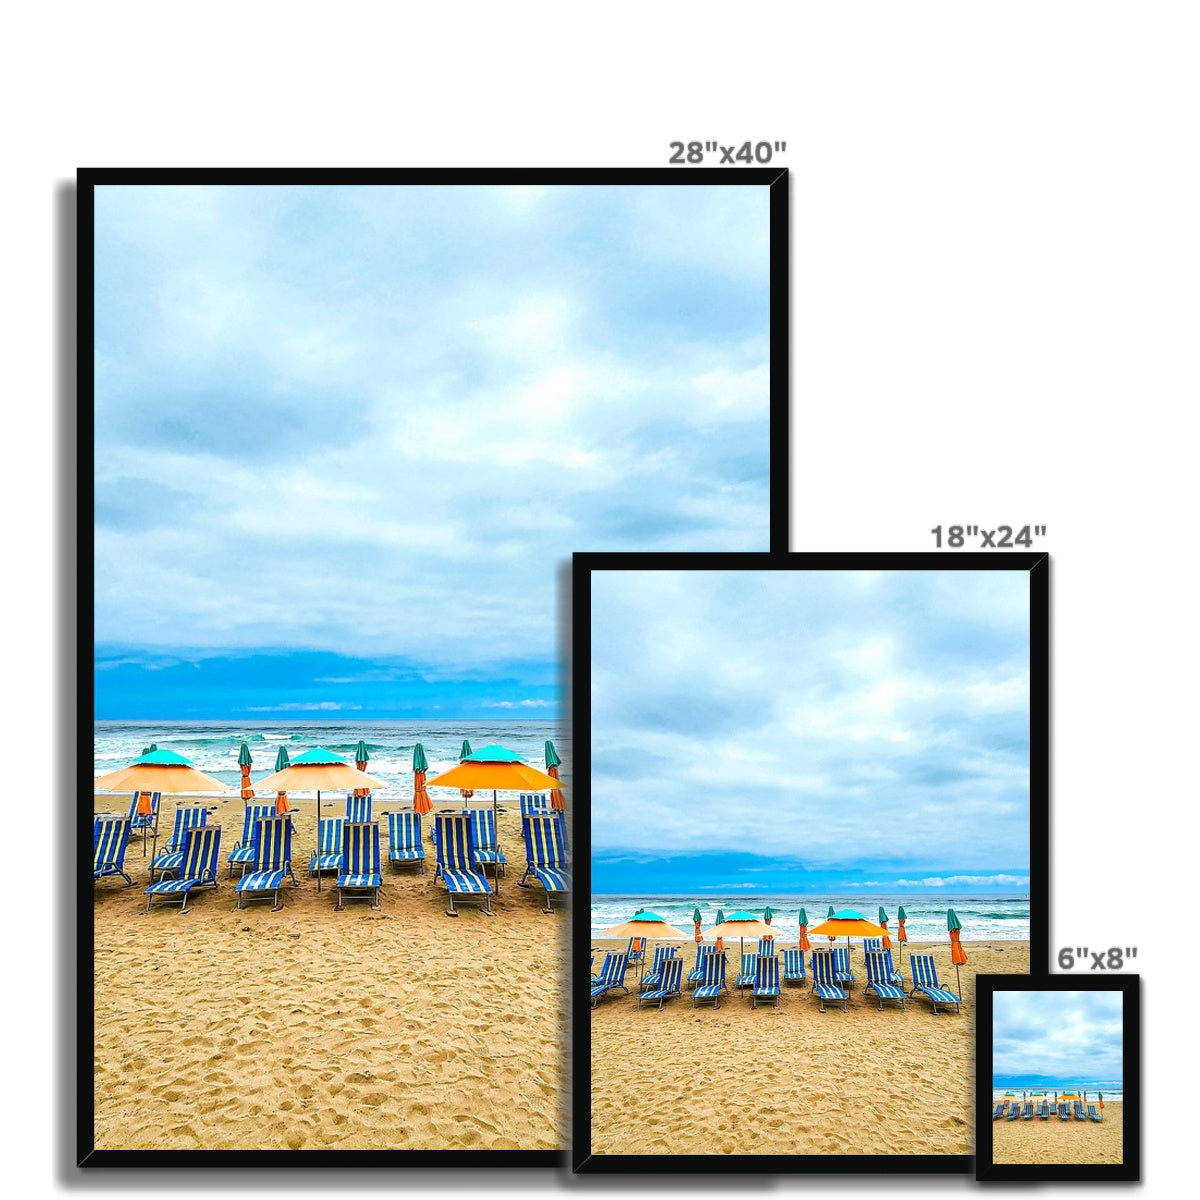 BTS Butter photo shoot Location Beach in south Korea_2 Framed Print